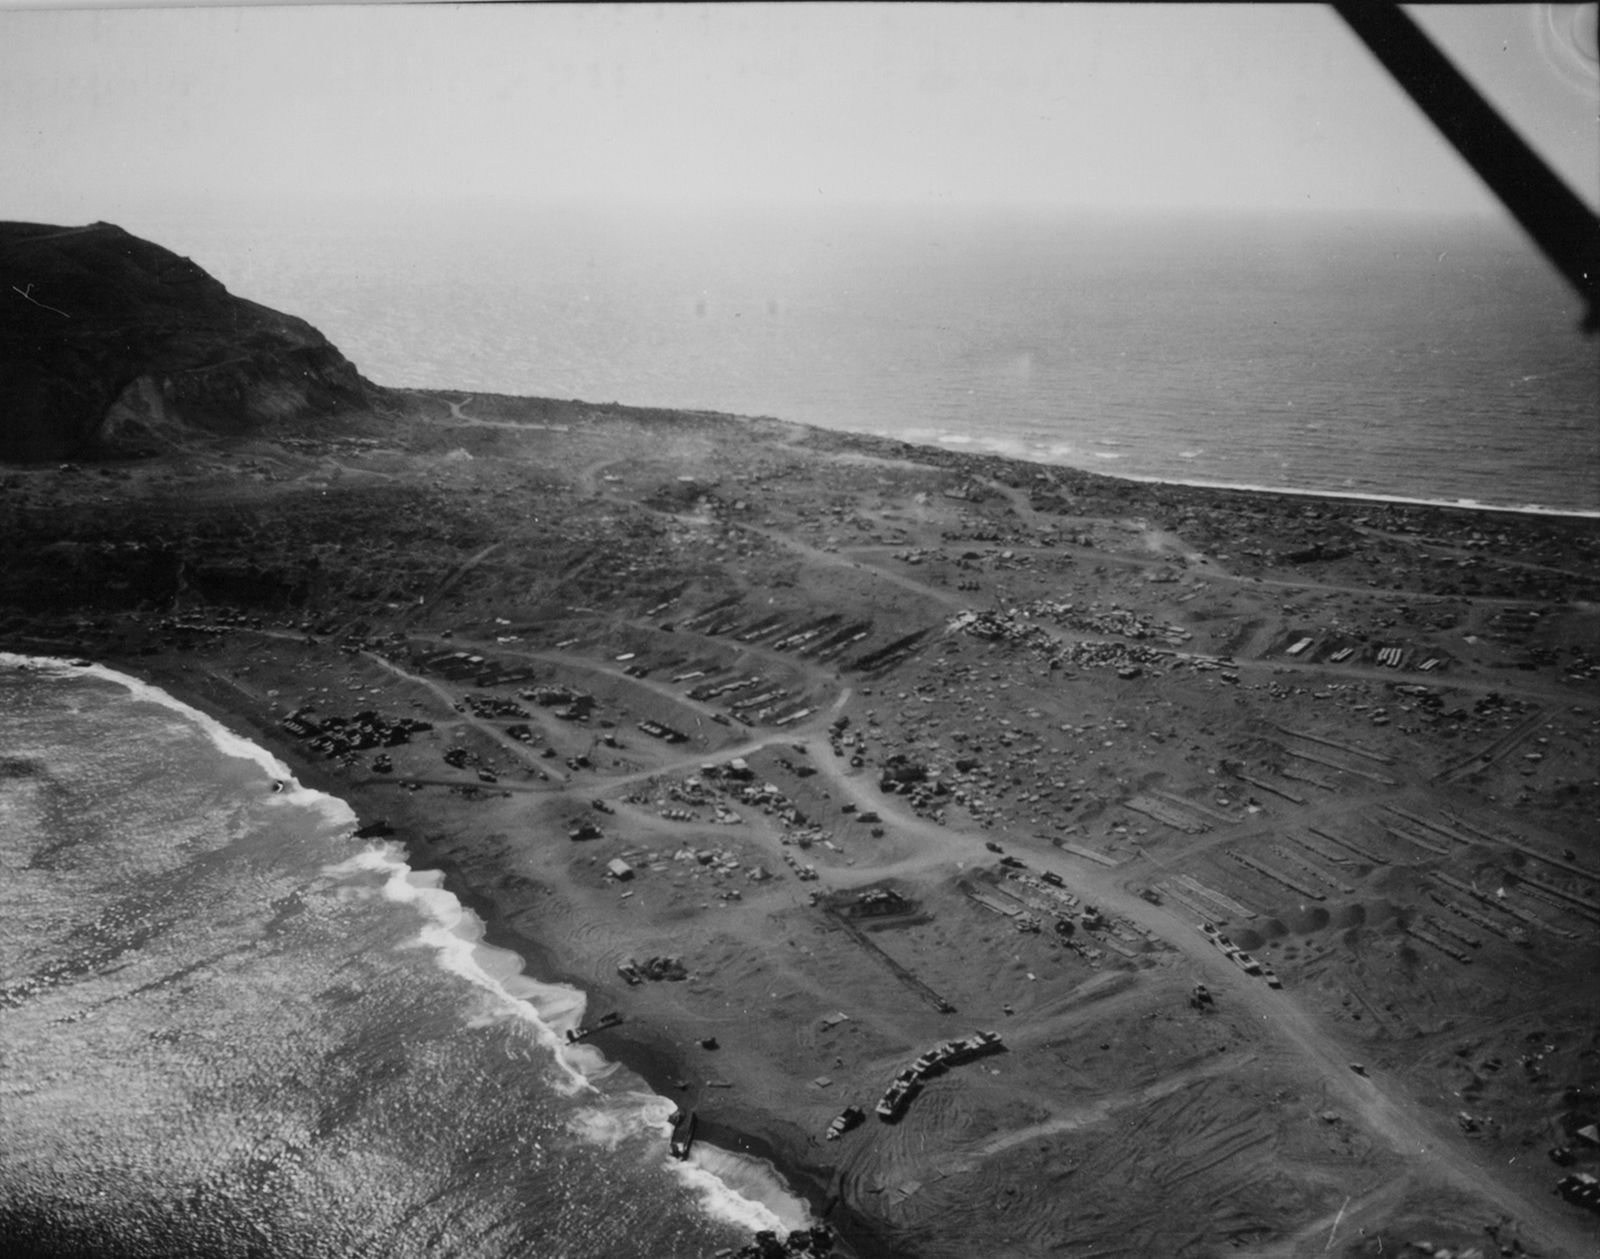 © Marianne Ingleby - Bruce Elkus, Iwo Jima 1945